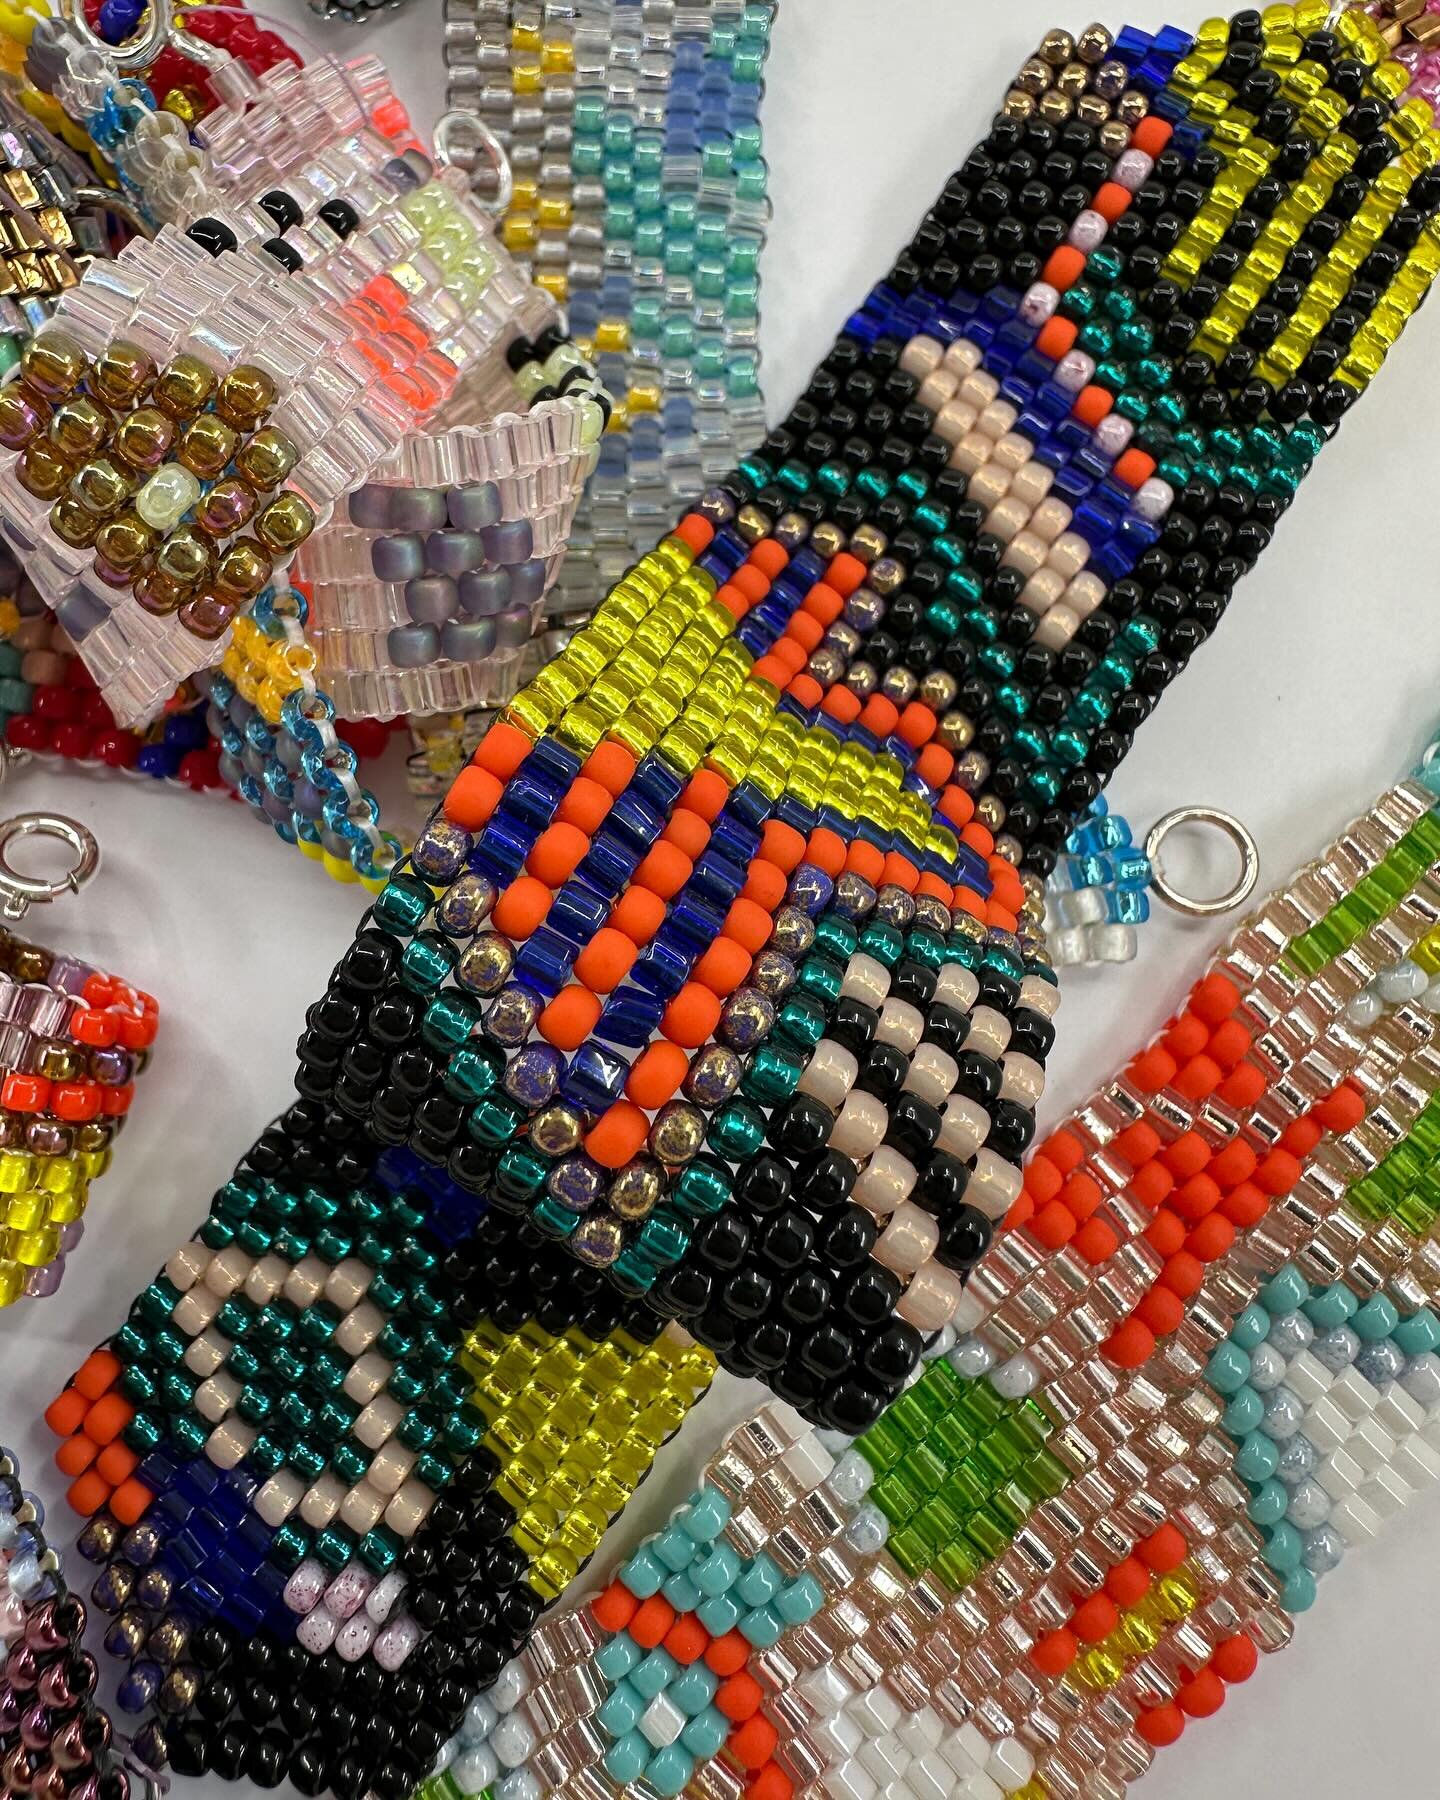 It&lsquo;s bracelet season 🫧❣️🫧

#BraceletSeason #SpringFashion #HandcraftedJewelry #FabiennemorelDesigns #ColorfulAccessories #ArtisanCrafts #SpringStyle #UniqueDesigns #HandmadeBracelets #ColorfulFashion #DesignerJewelry #SpringVibes #ArtisticTou